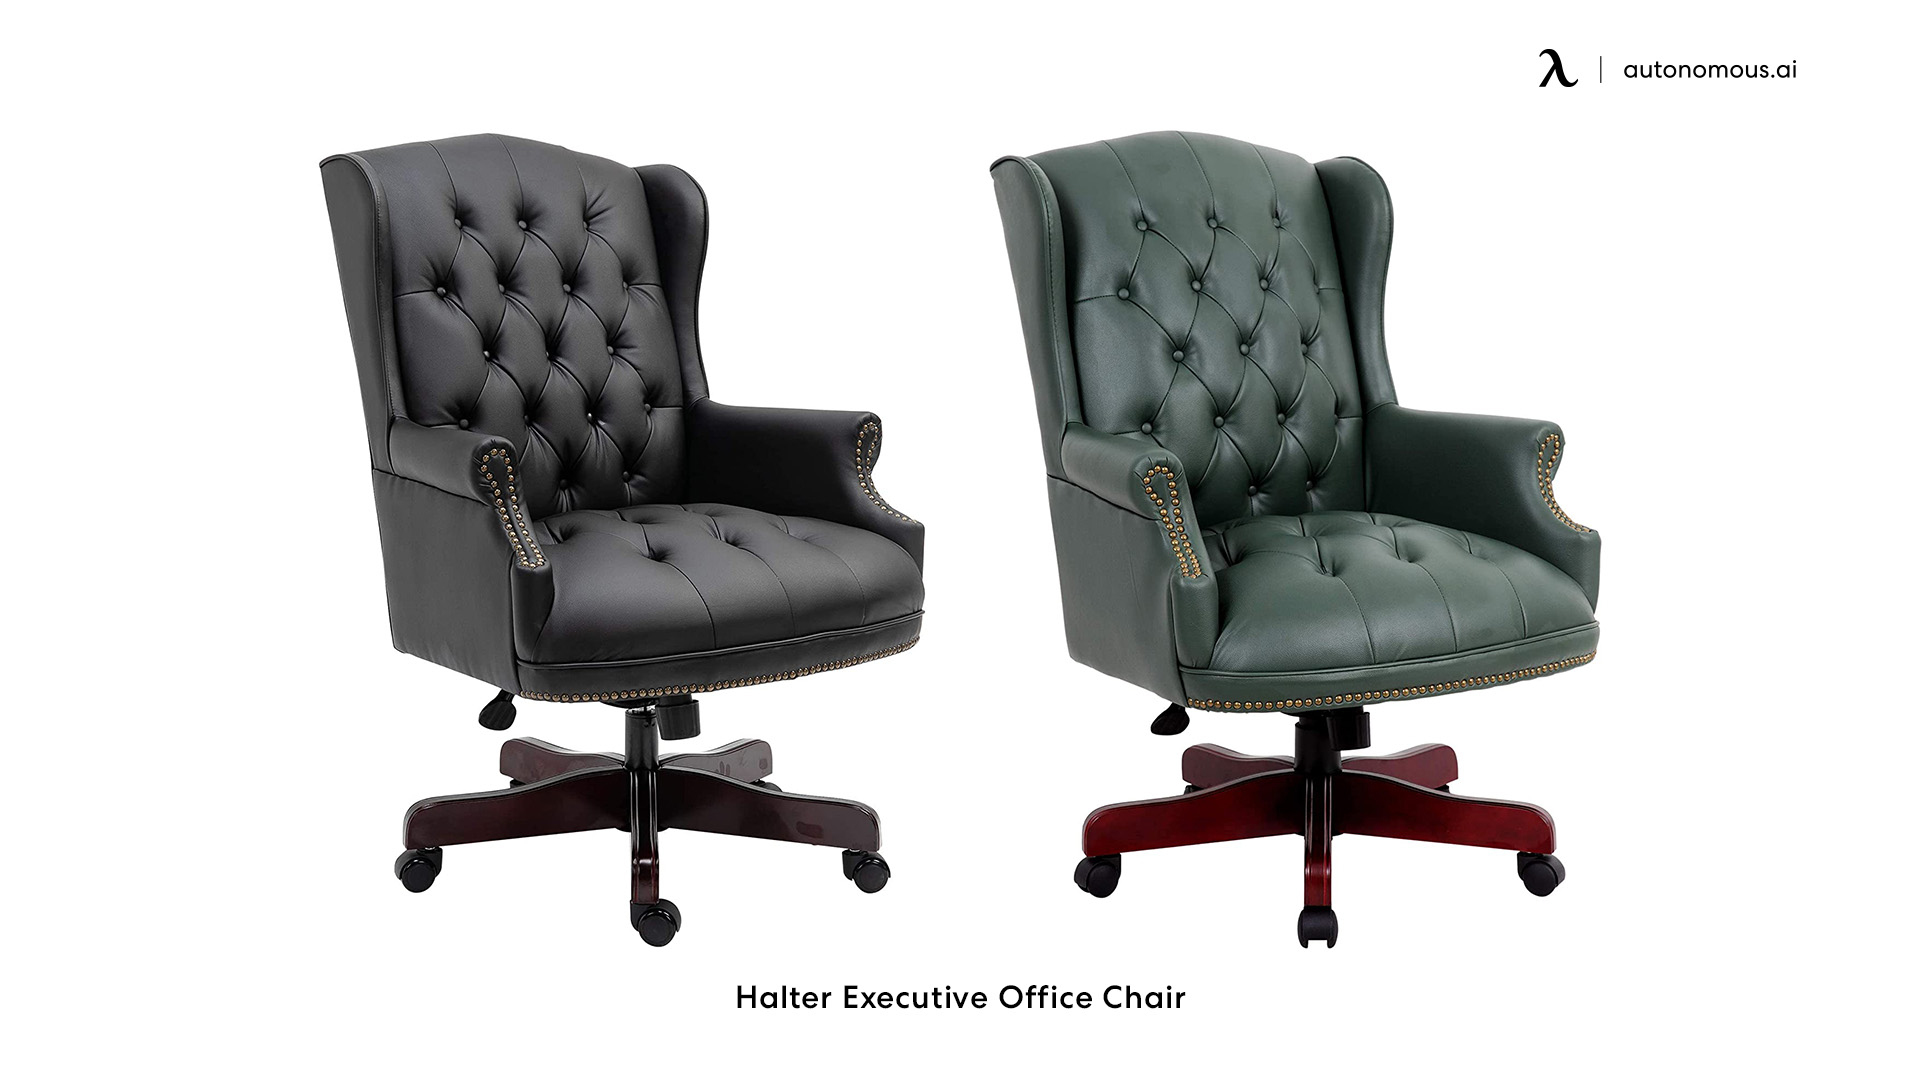 Halter Executive Office Chair